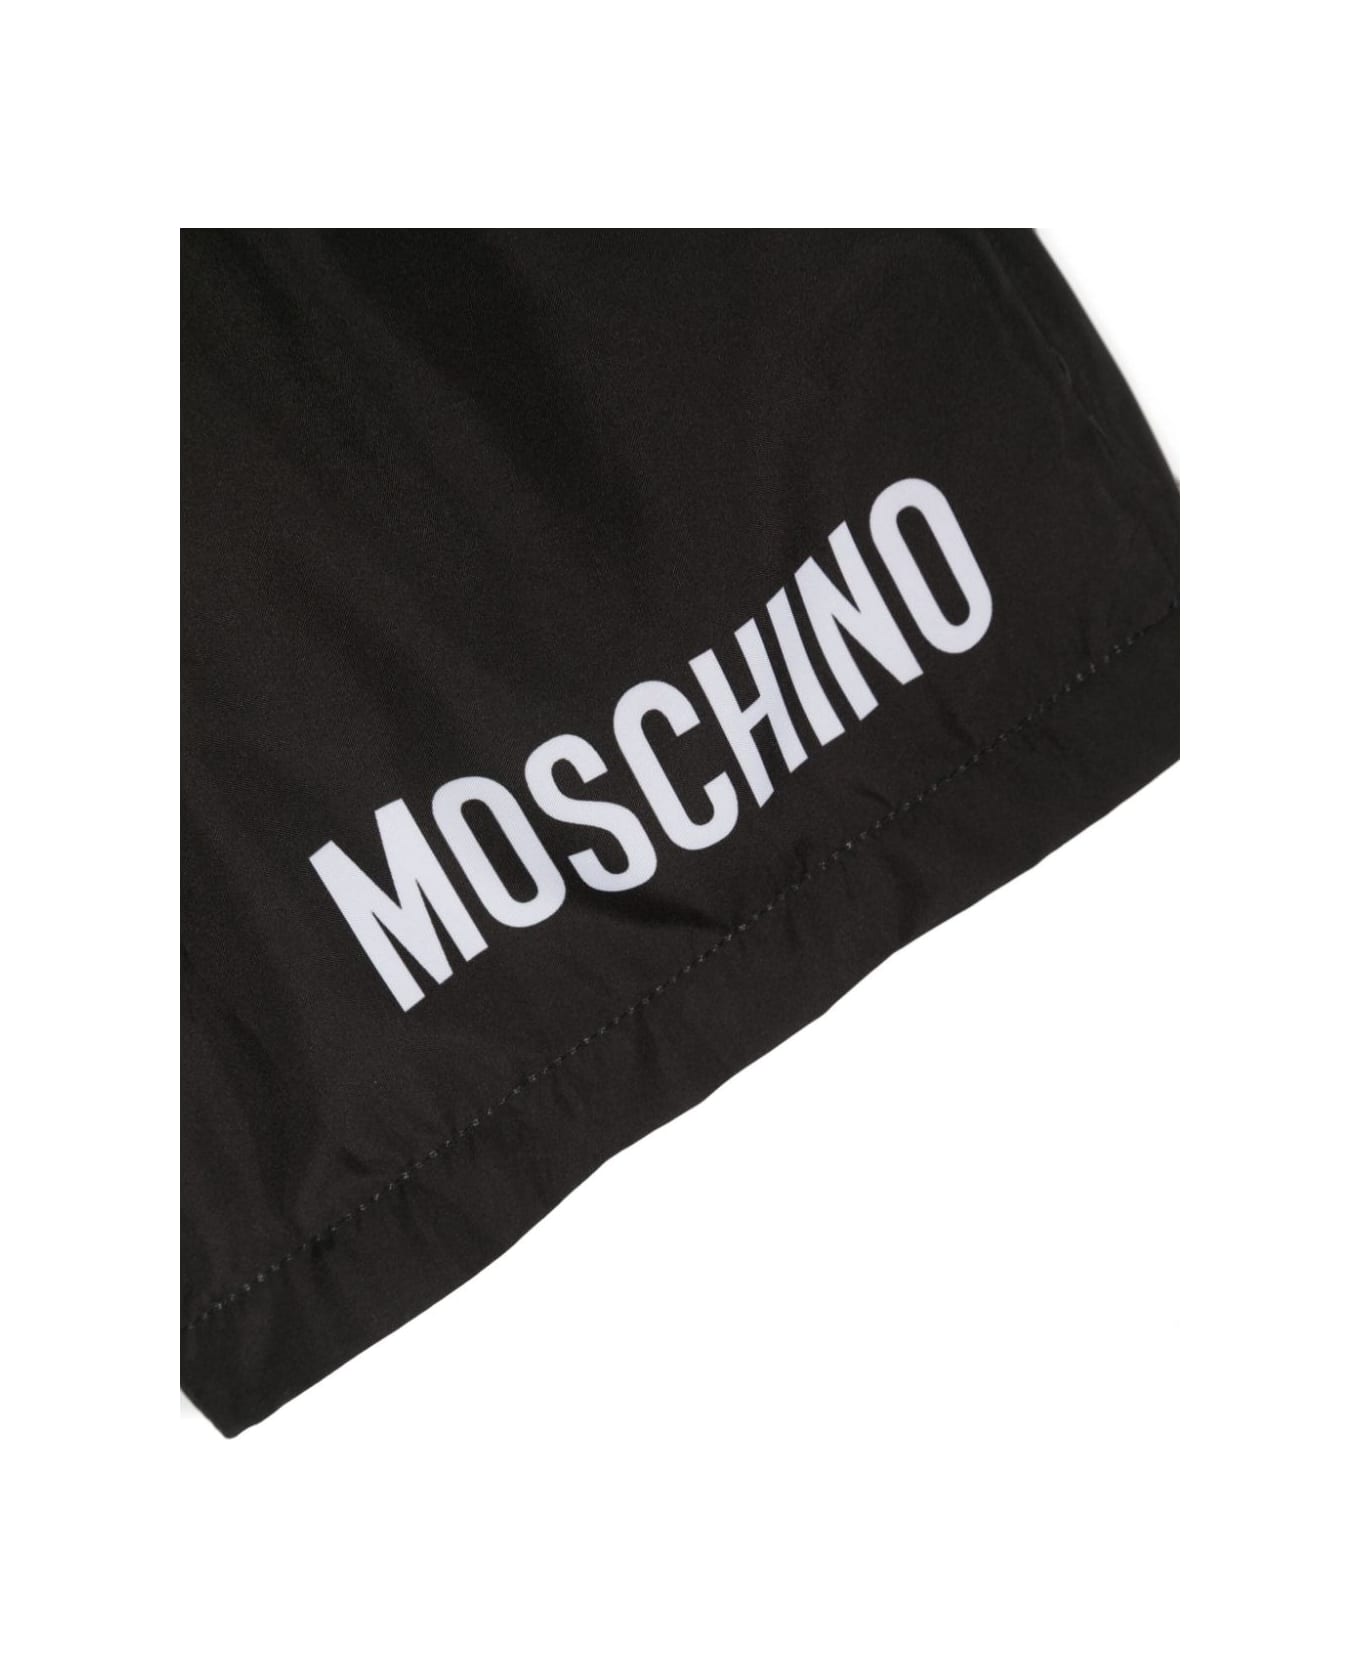 Moschino Black Swimwear With Logo - Black